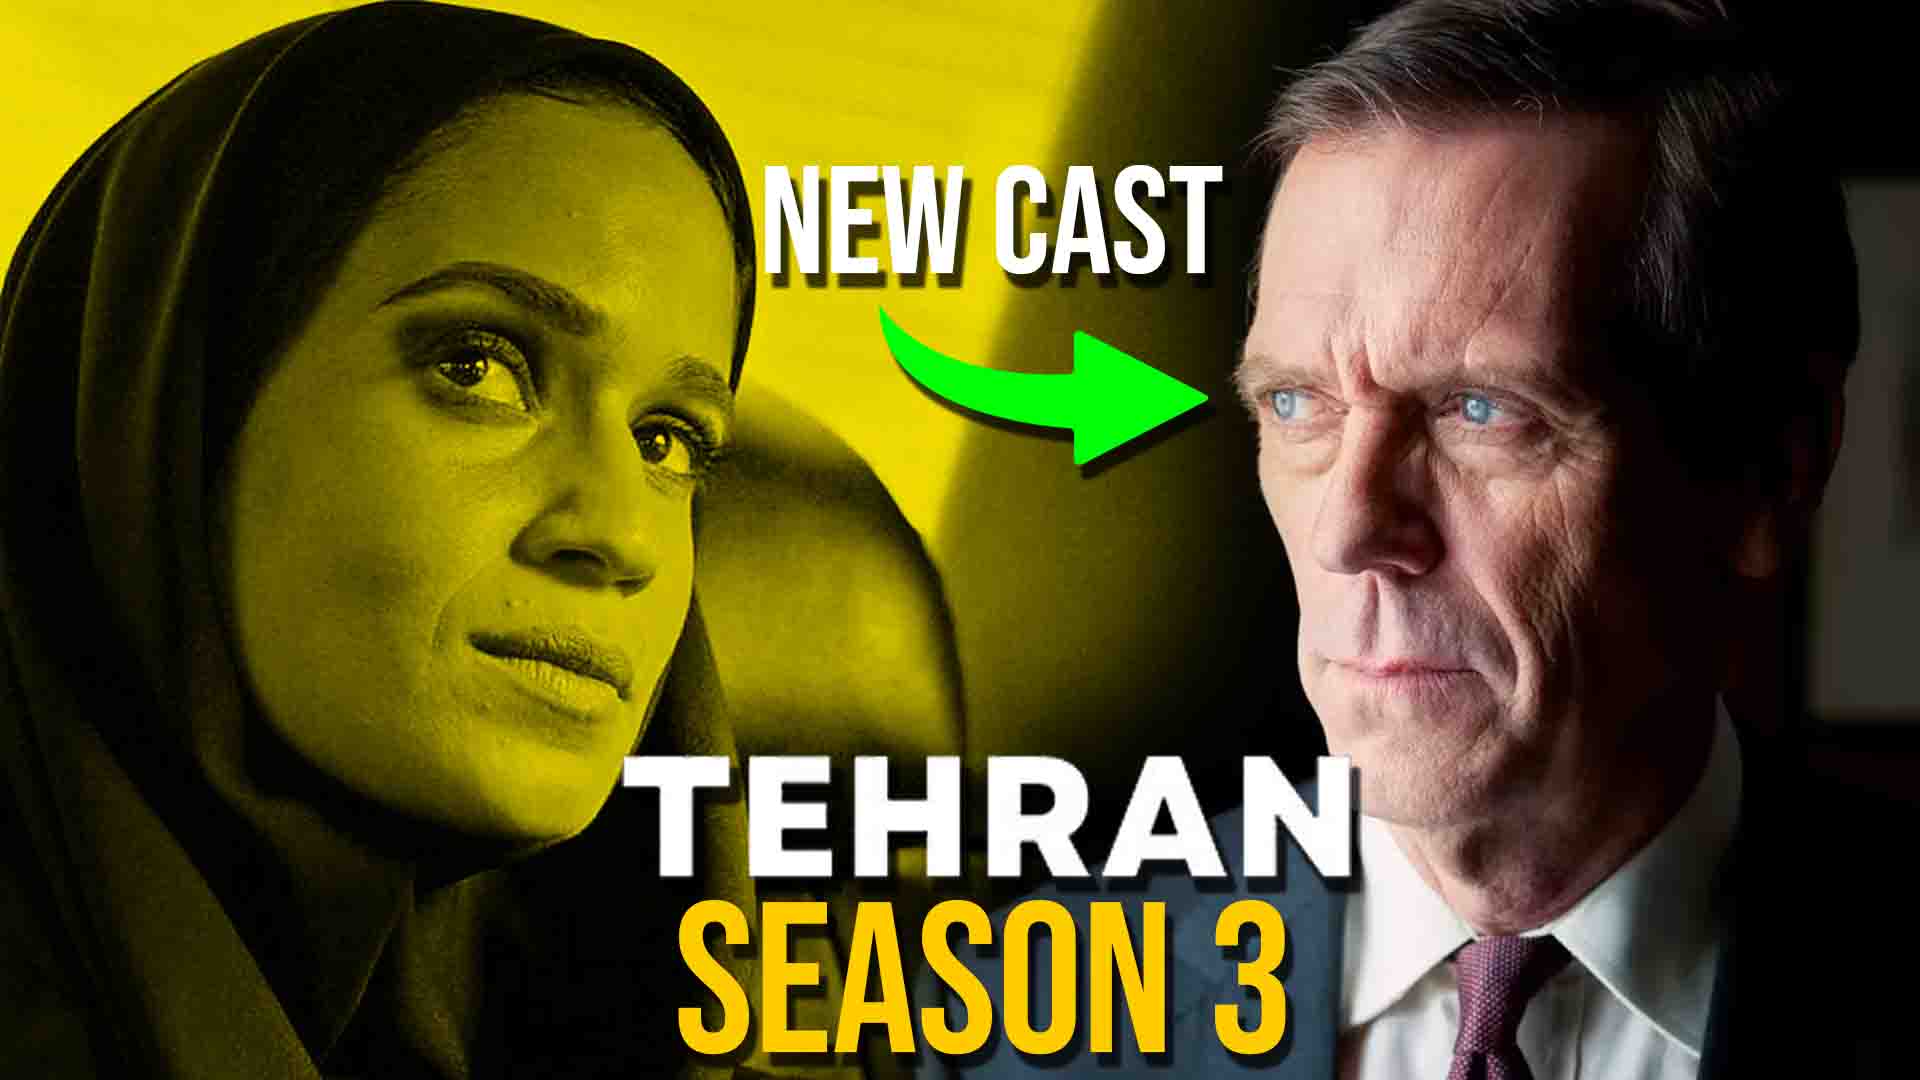 Tehran Season 3 Renewed and “New Cast Member” Added!